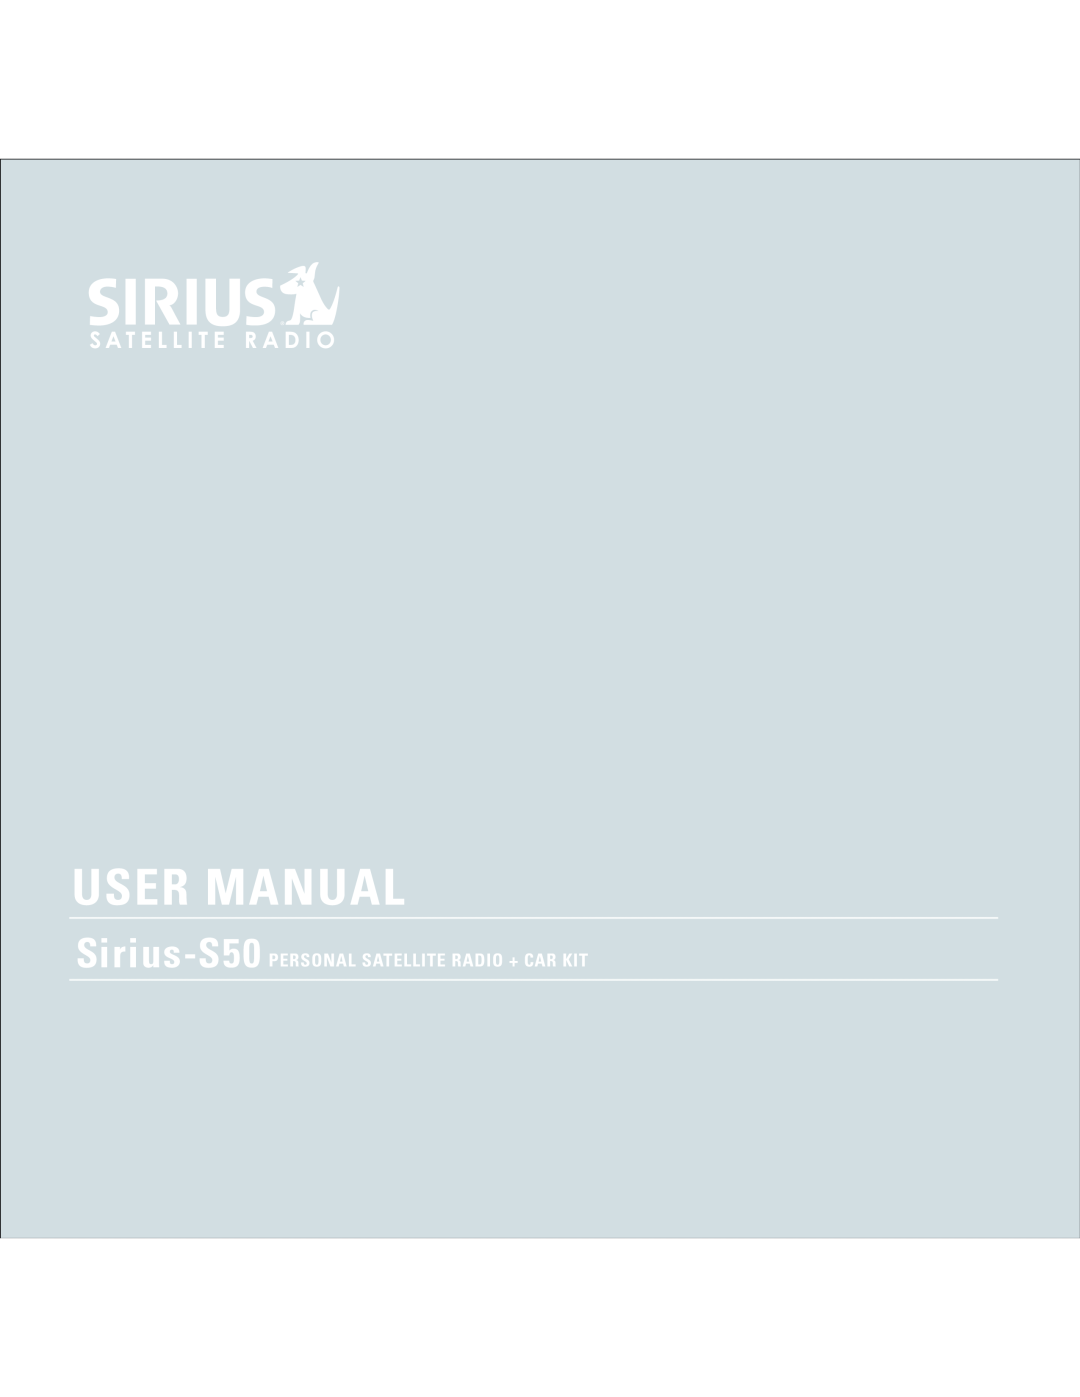 Sirius Satellite Radio user manual Sirius-S50PERSONAL Satellite Radio + CAR KIT 